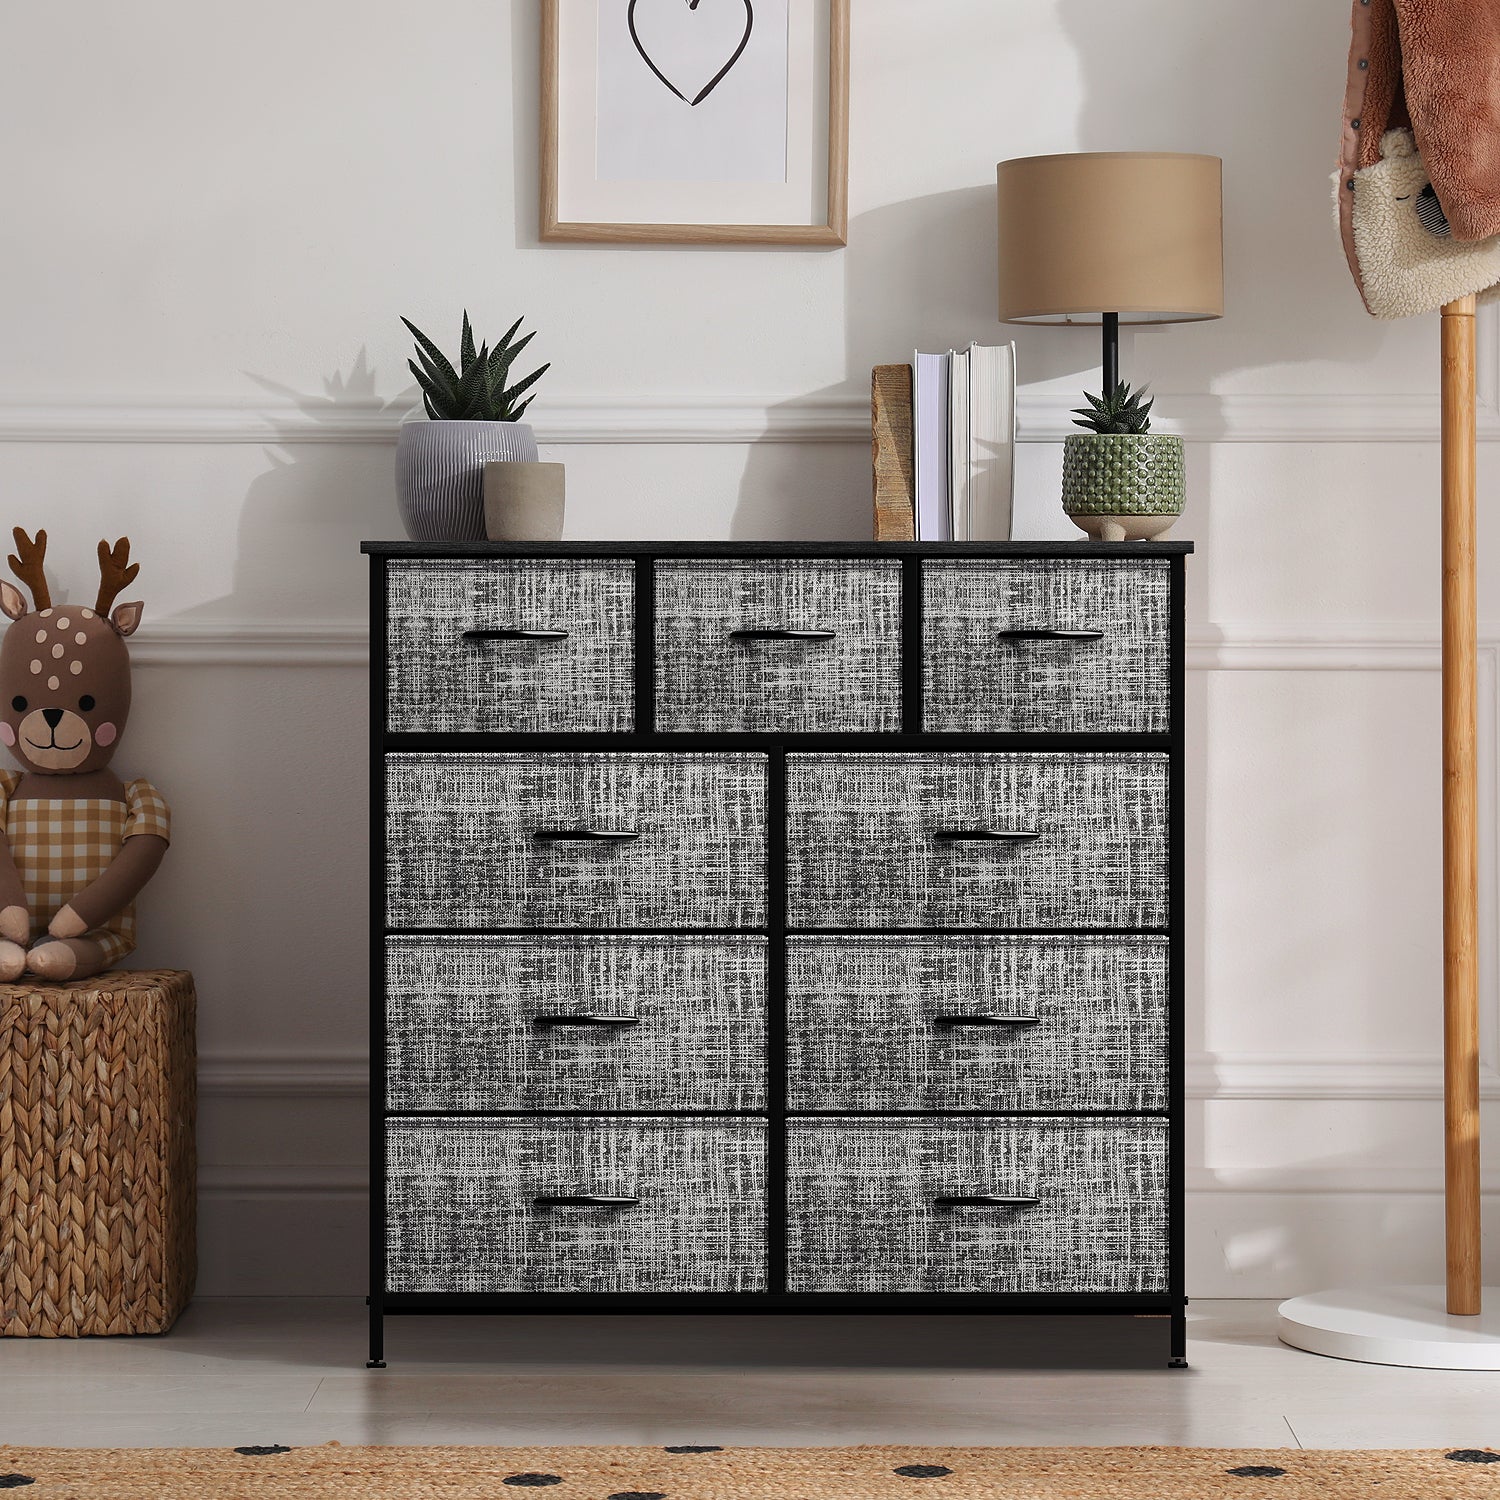 9-Drawer Dresser (Textured Gray Print)